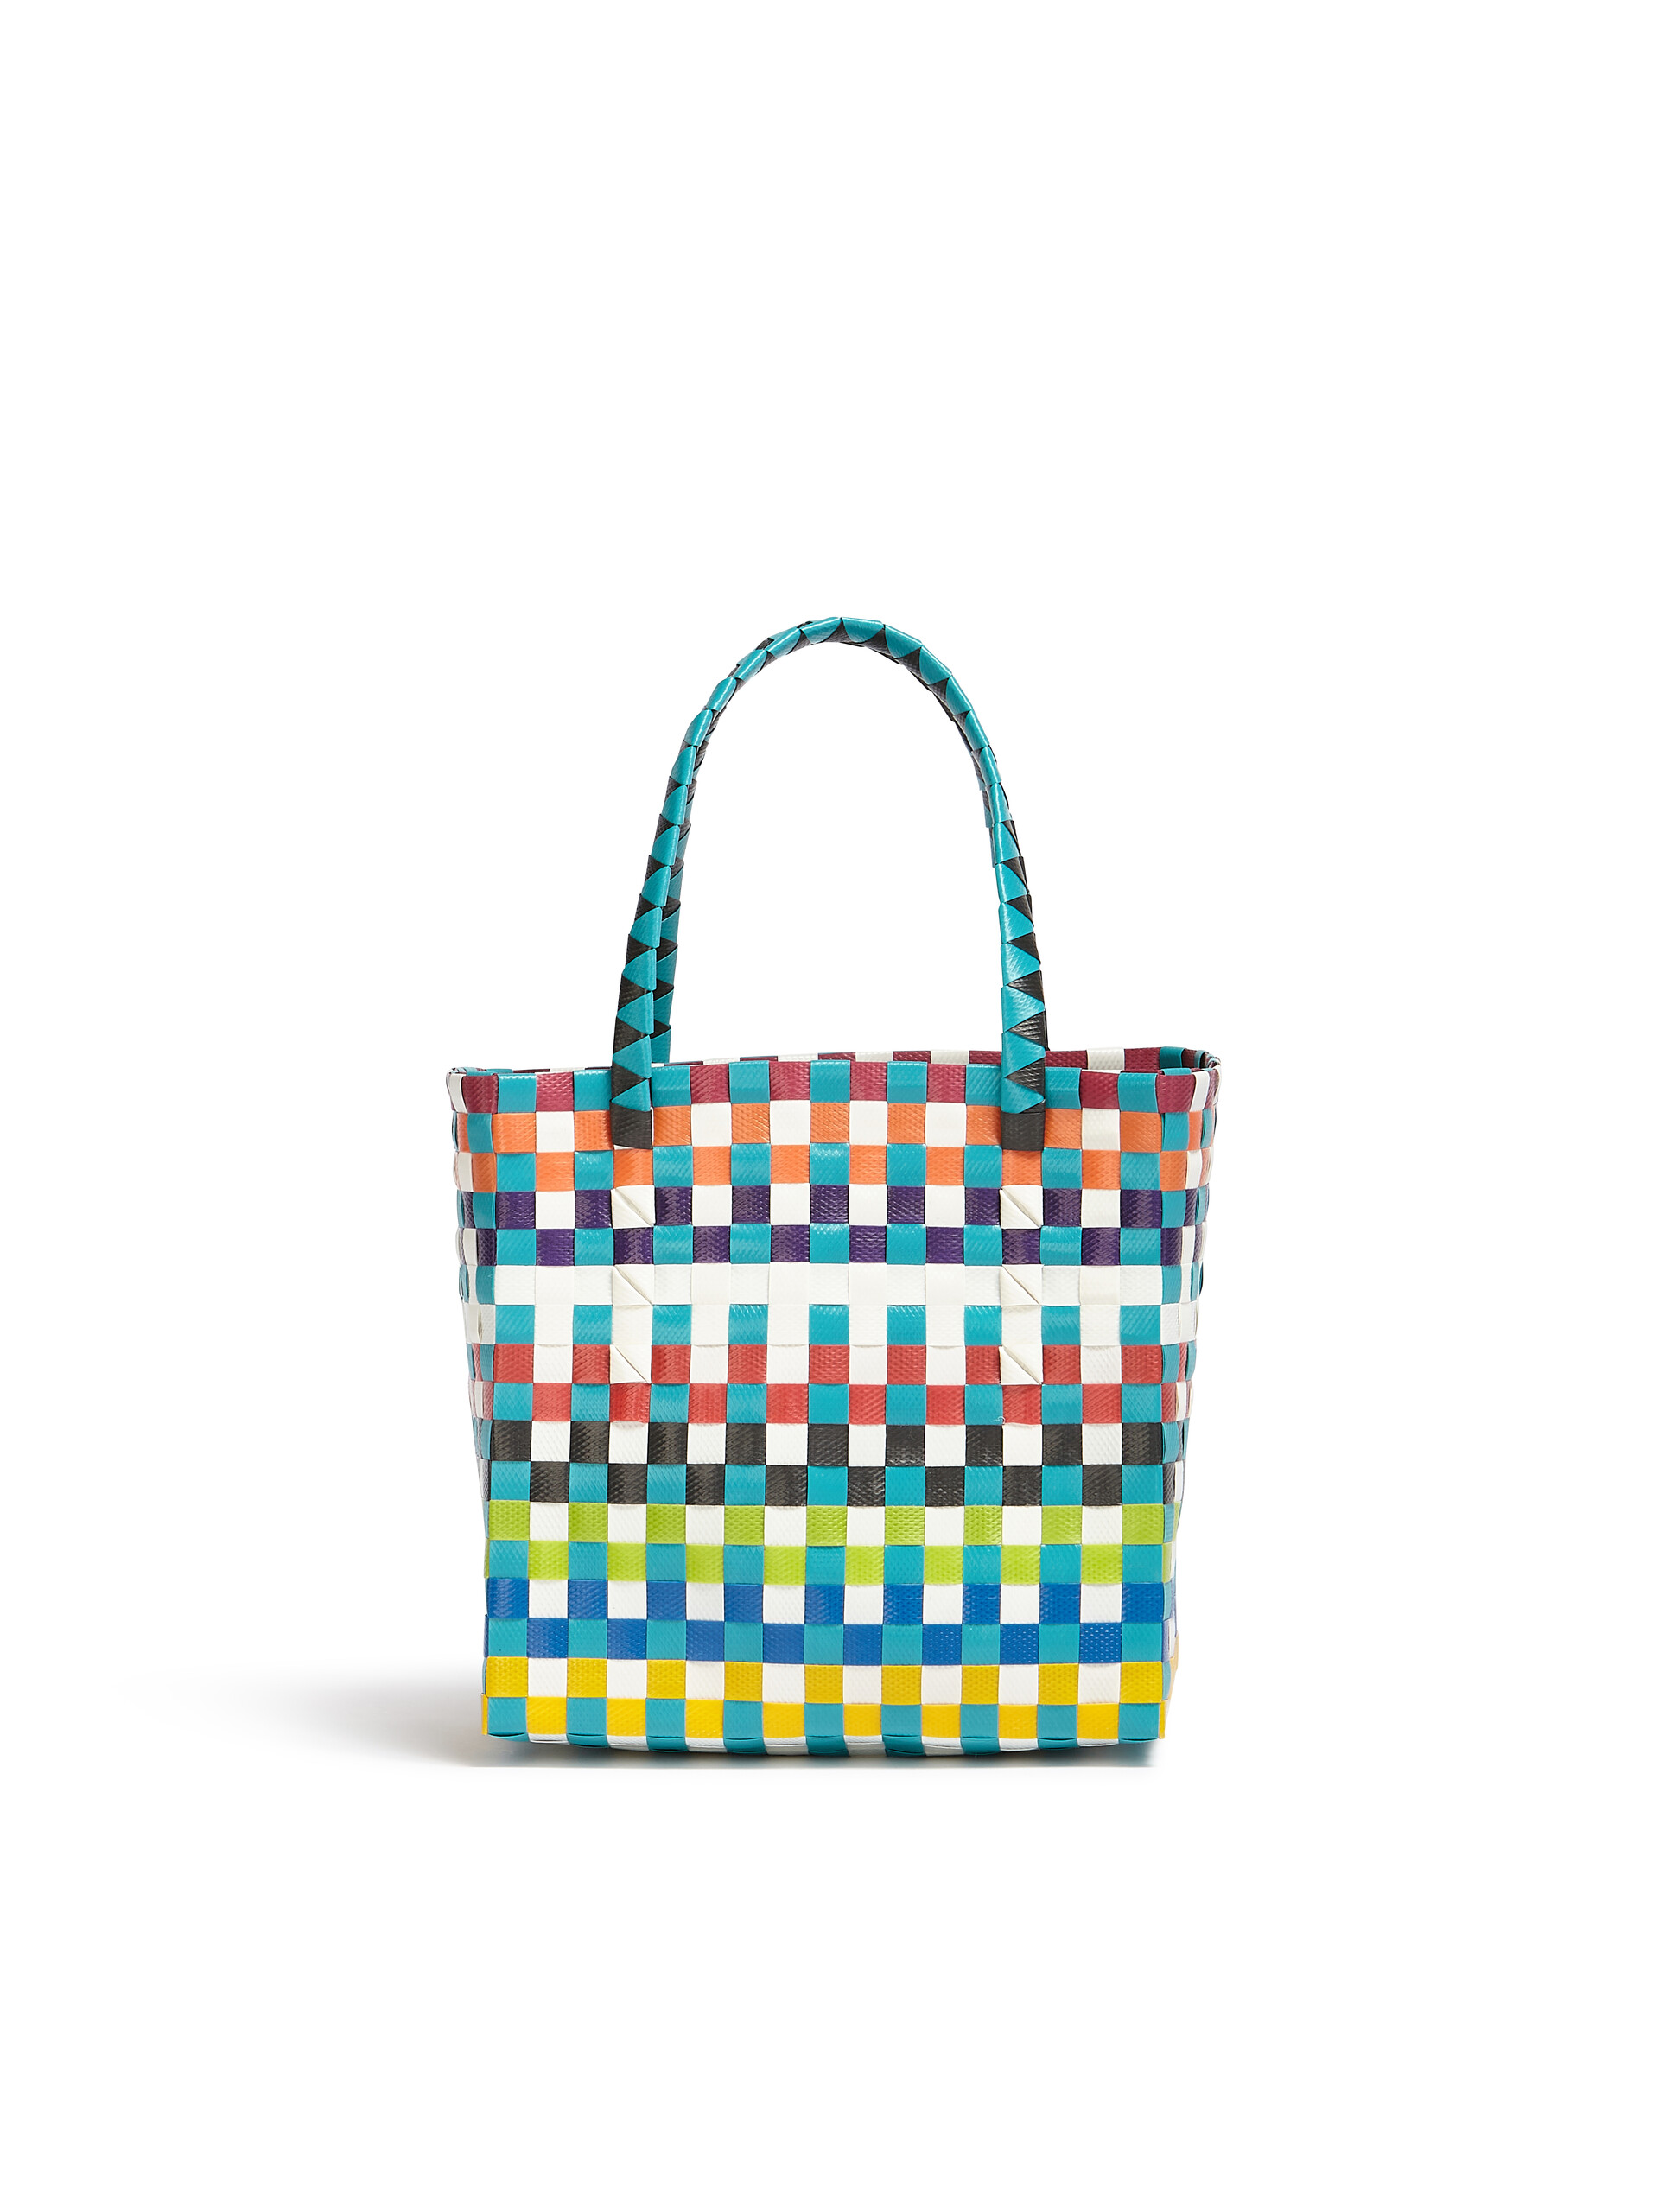 MARNI MARKET MINI BASKET bag in multicolor woven material - Bags - Image 3